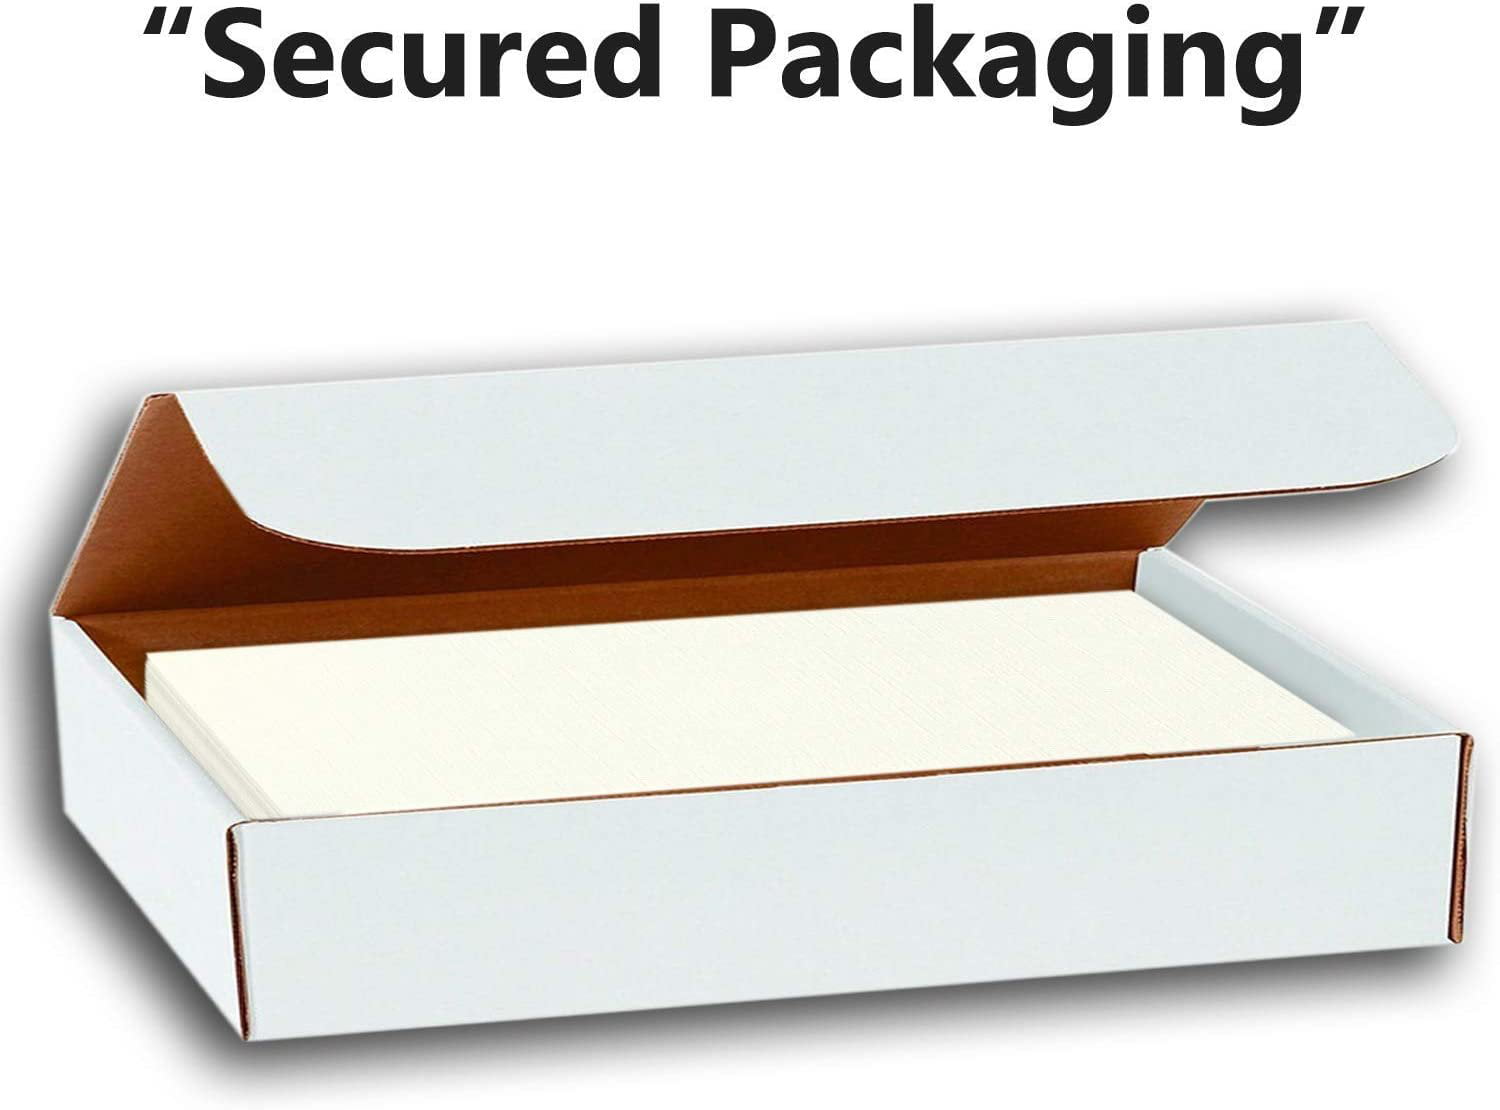  28lb White Linen Resume Paper & Envelopes - 40 Sets : Office  Products